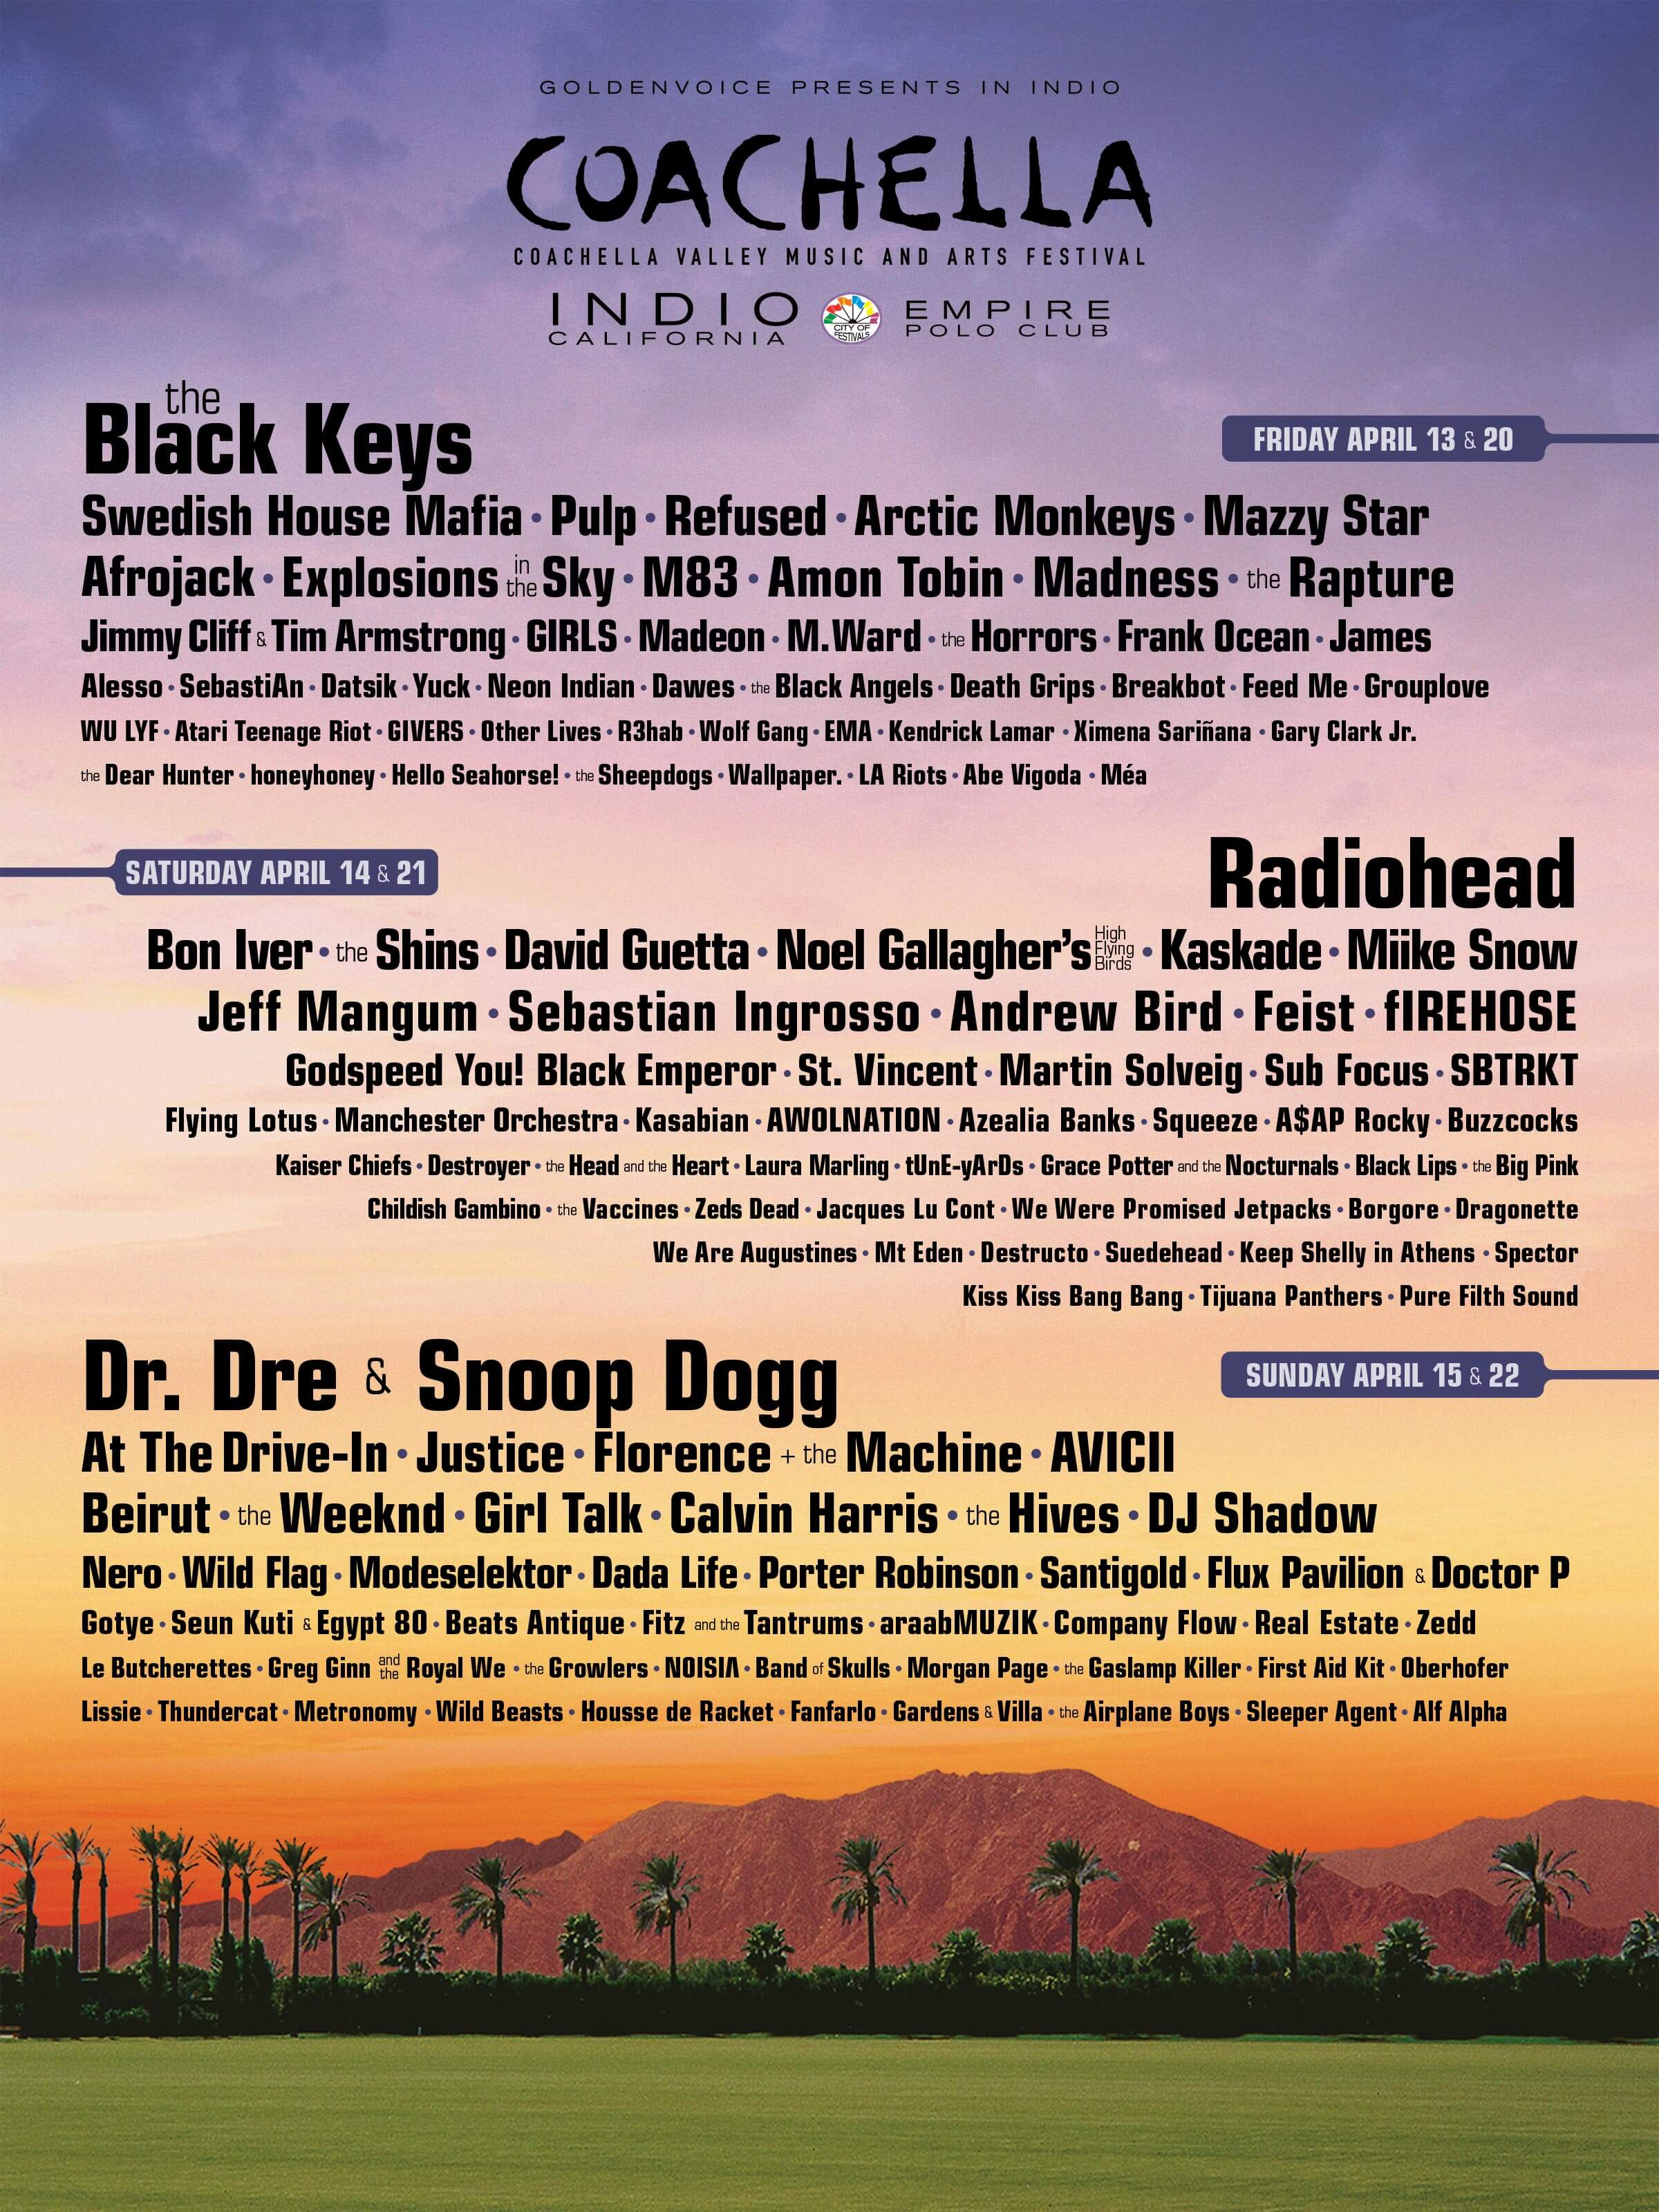 Coachella 2012 Lineup Poster